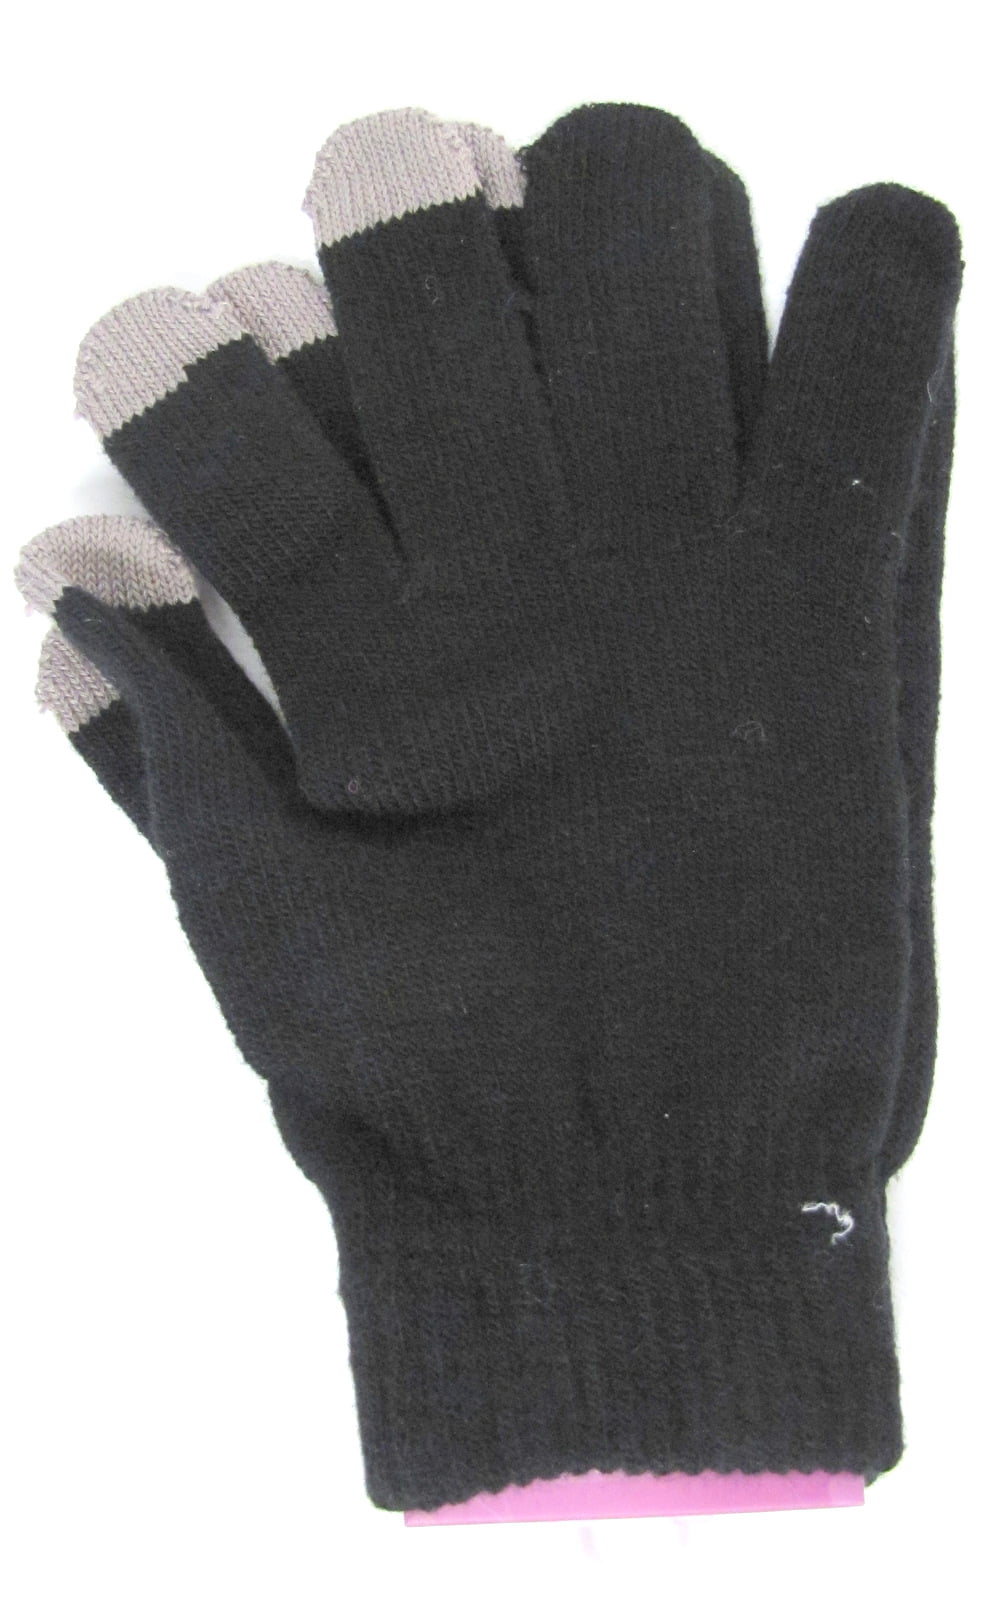 Women's Solid Neon Knit Winter Gloves Black - Walmart.com